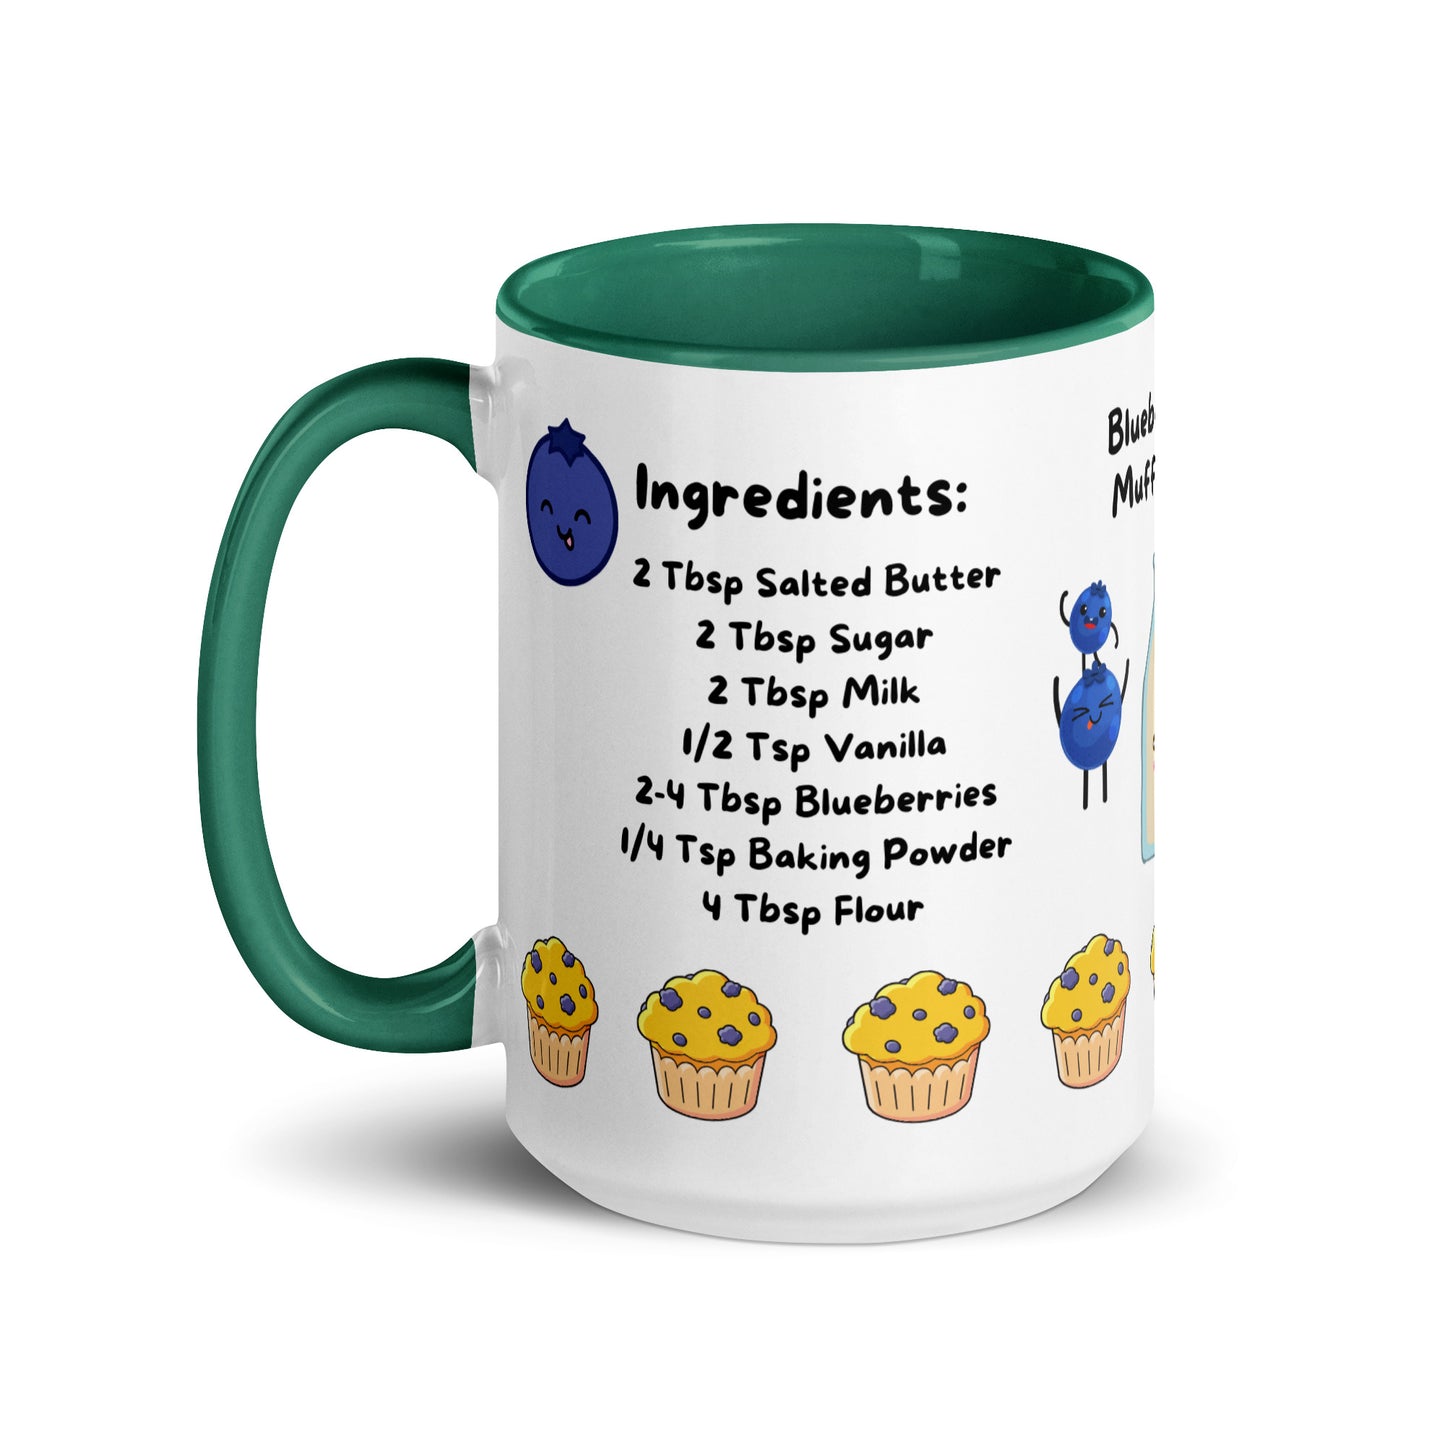 Blueberry Muffin *Mug Cake Recipe Mug*